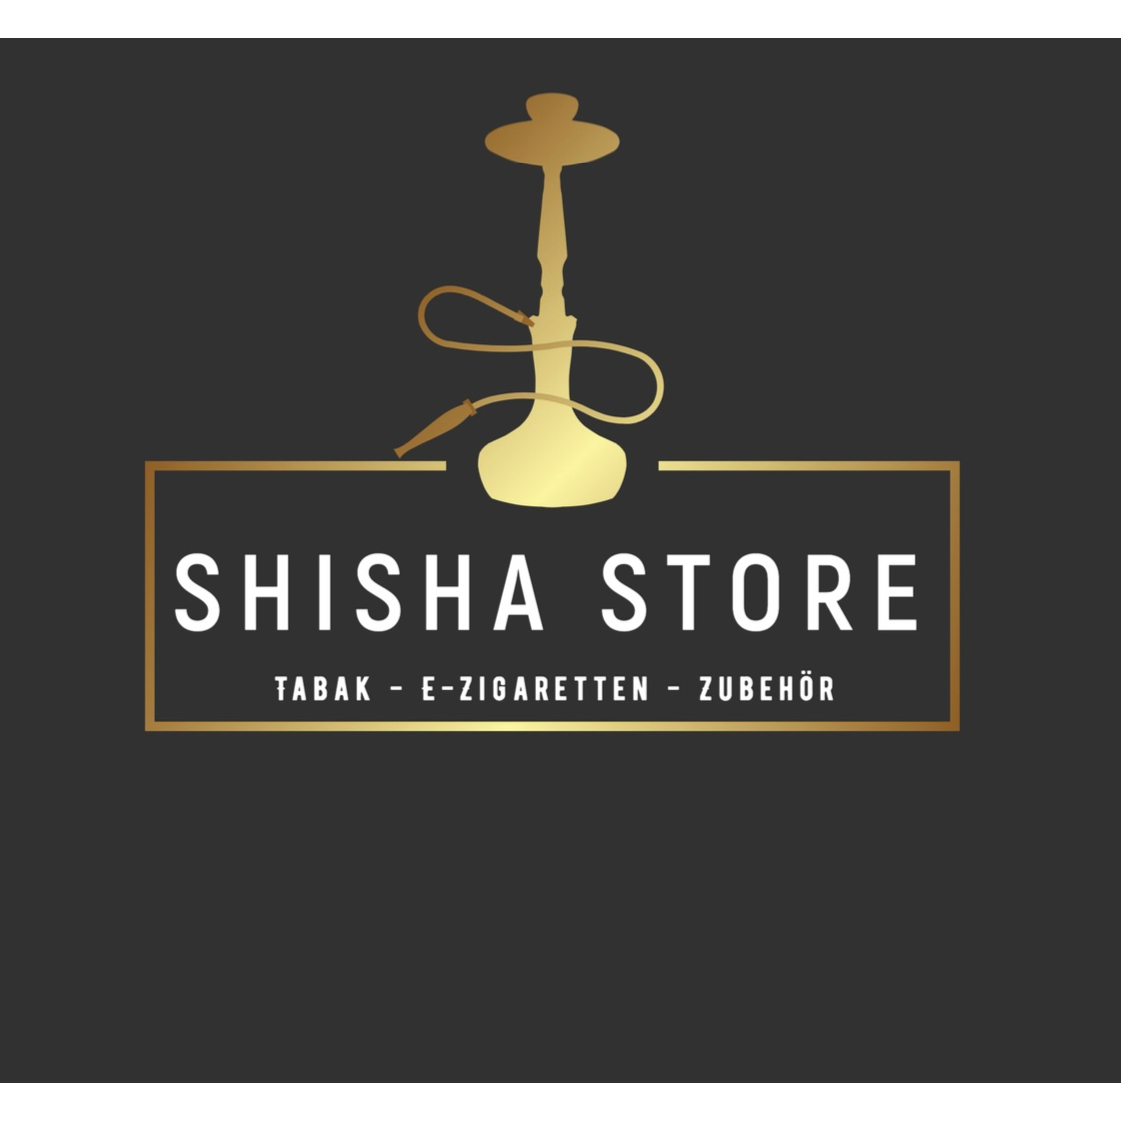 Shisha Store Buchholz in Buchholz in der Nordheide - Logo